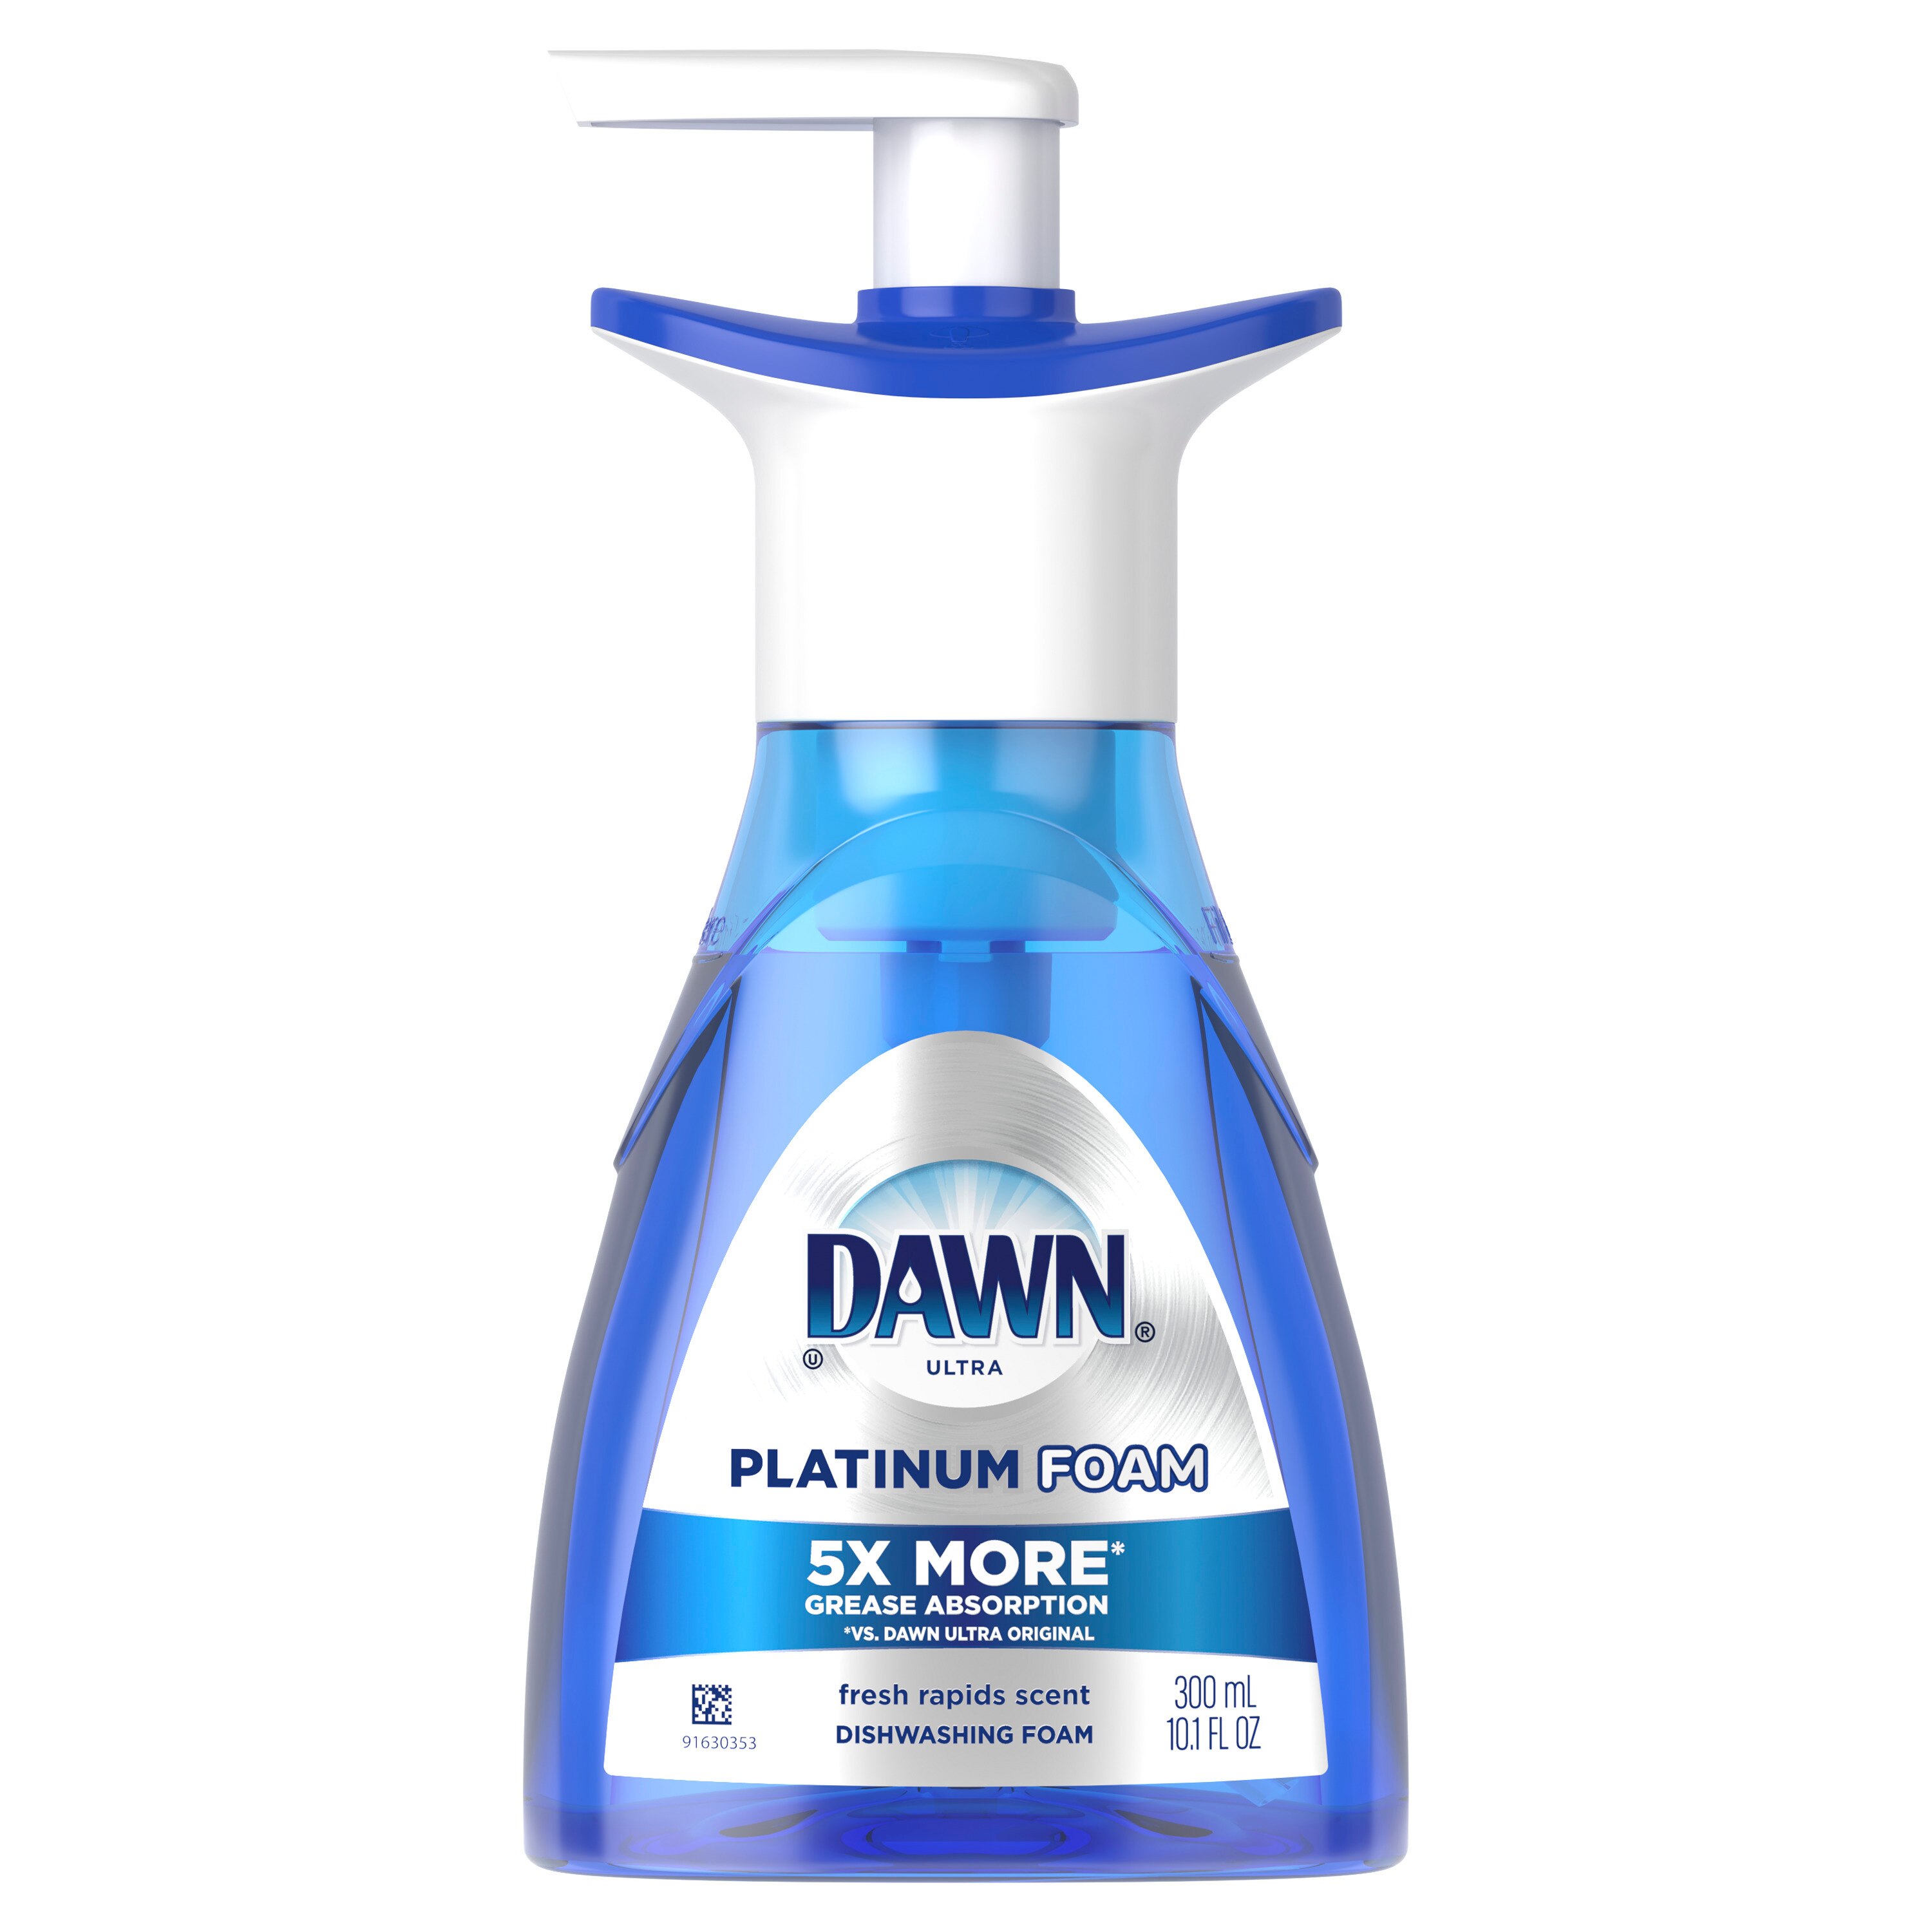 Dawn Ultra Platinum Erasing Dish Foam Fresh Rapids, 10.1 OZ